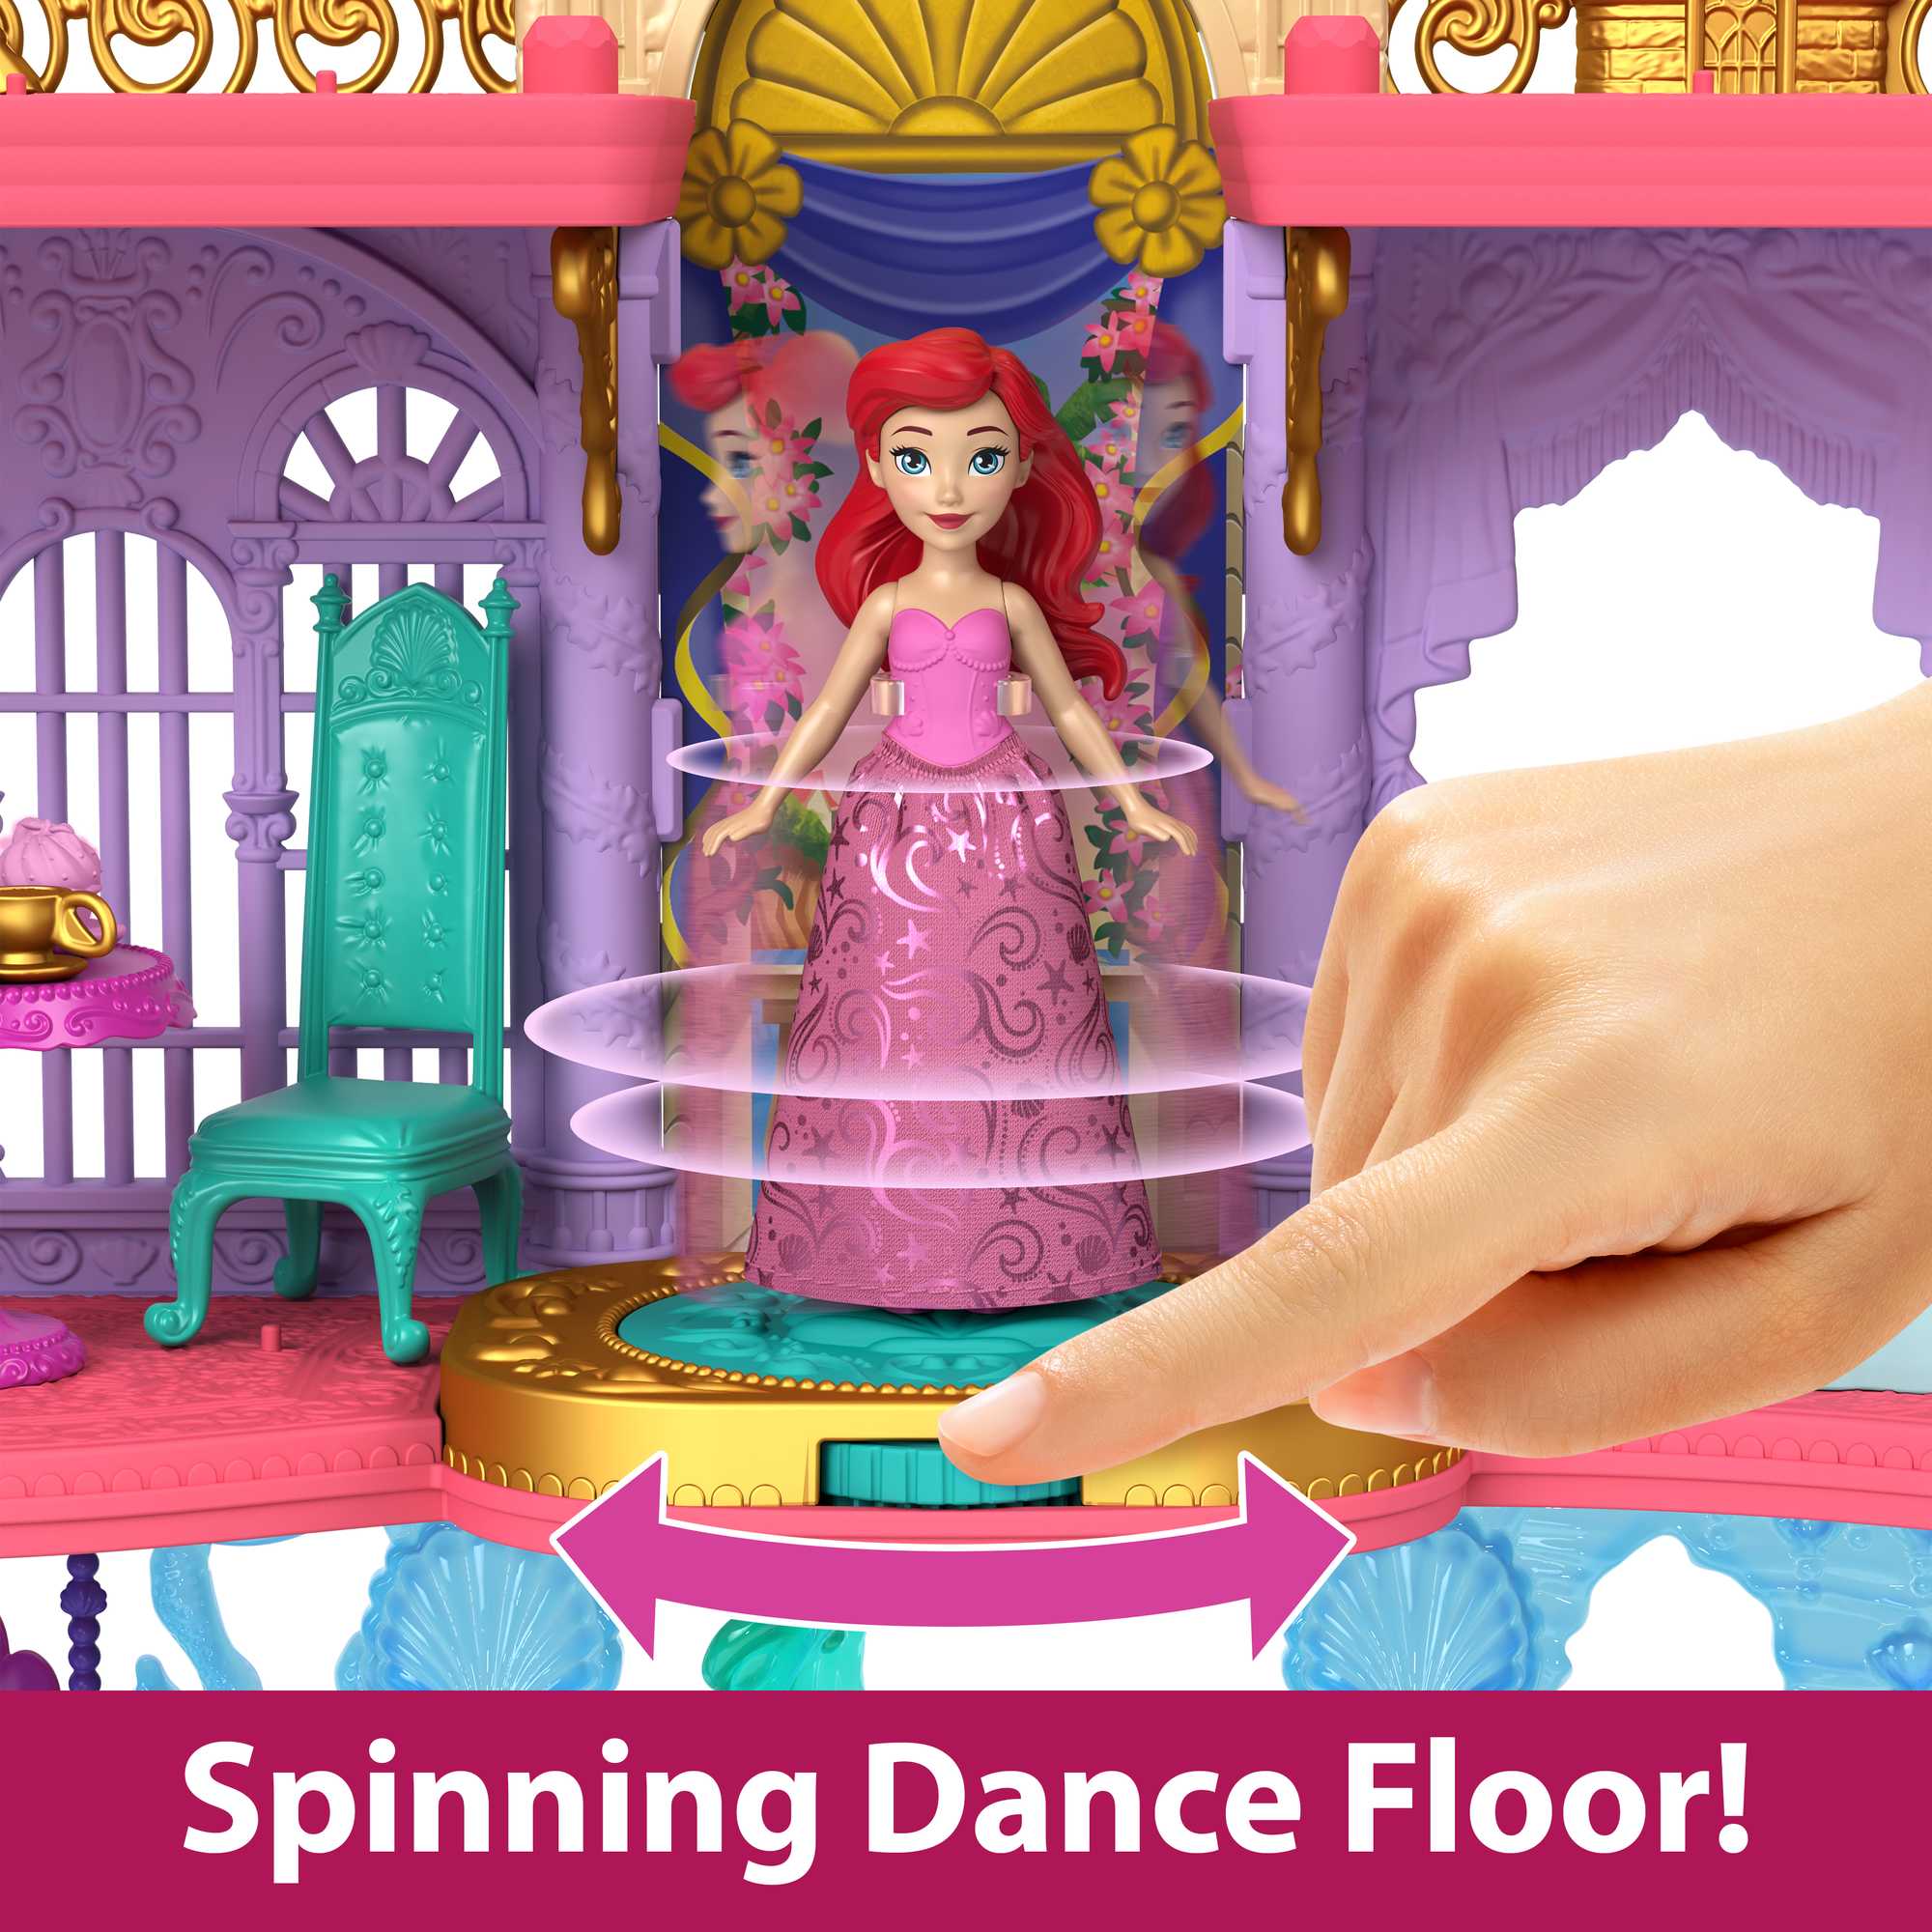 Disney Princess Ariels Castle Playset